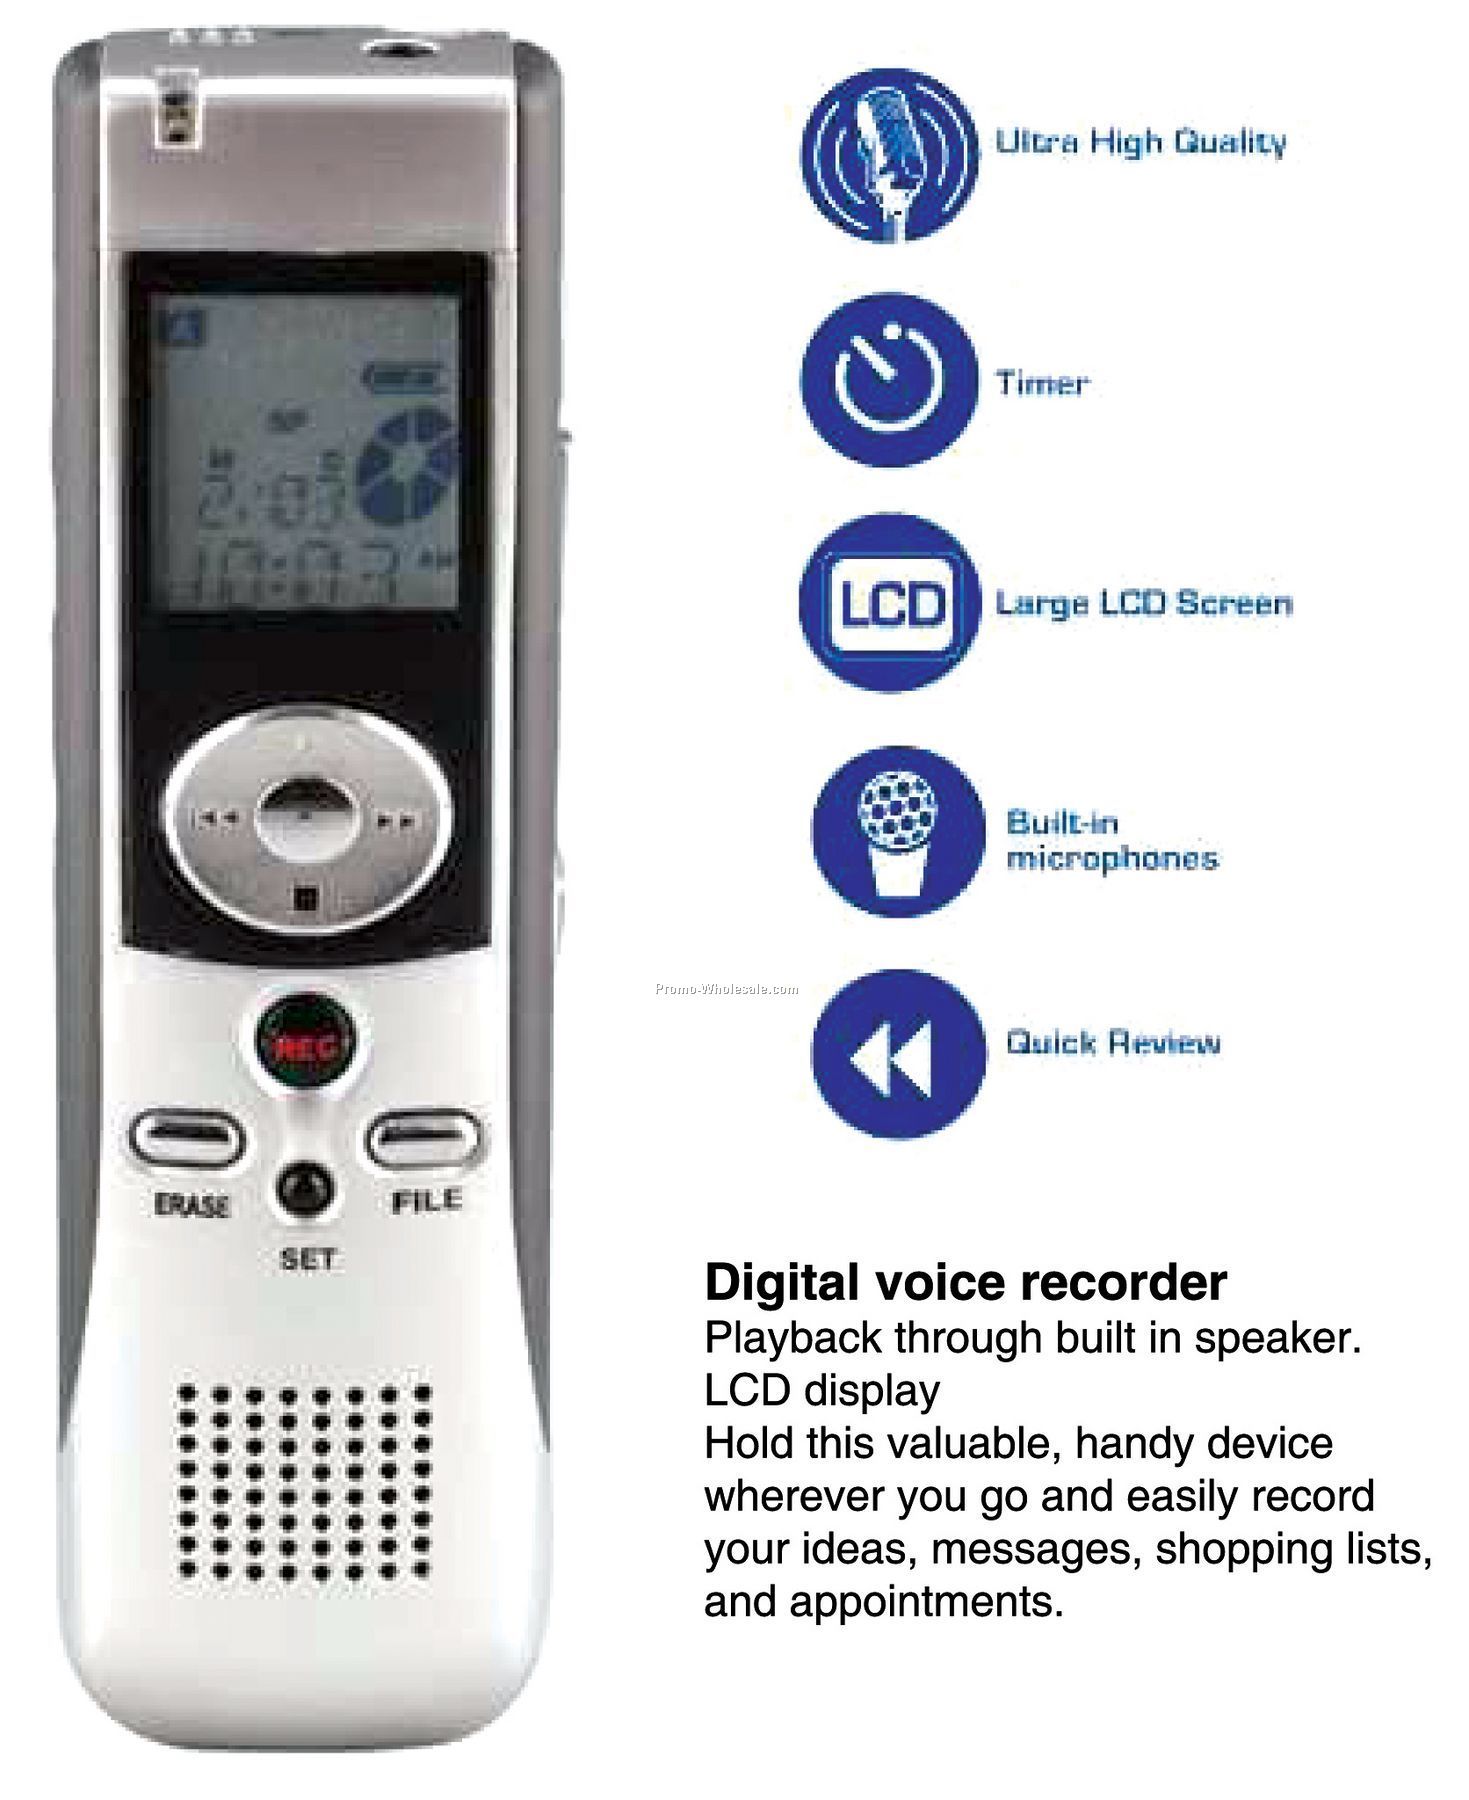 Digital Voice Recorder (32mb Memory)